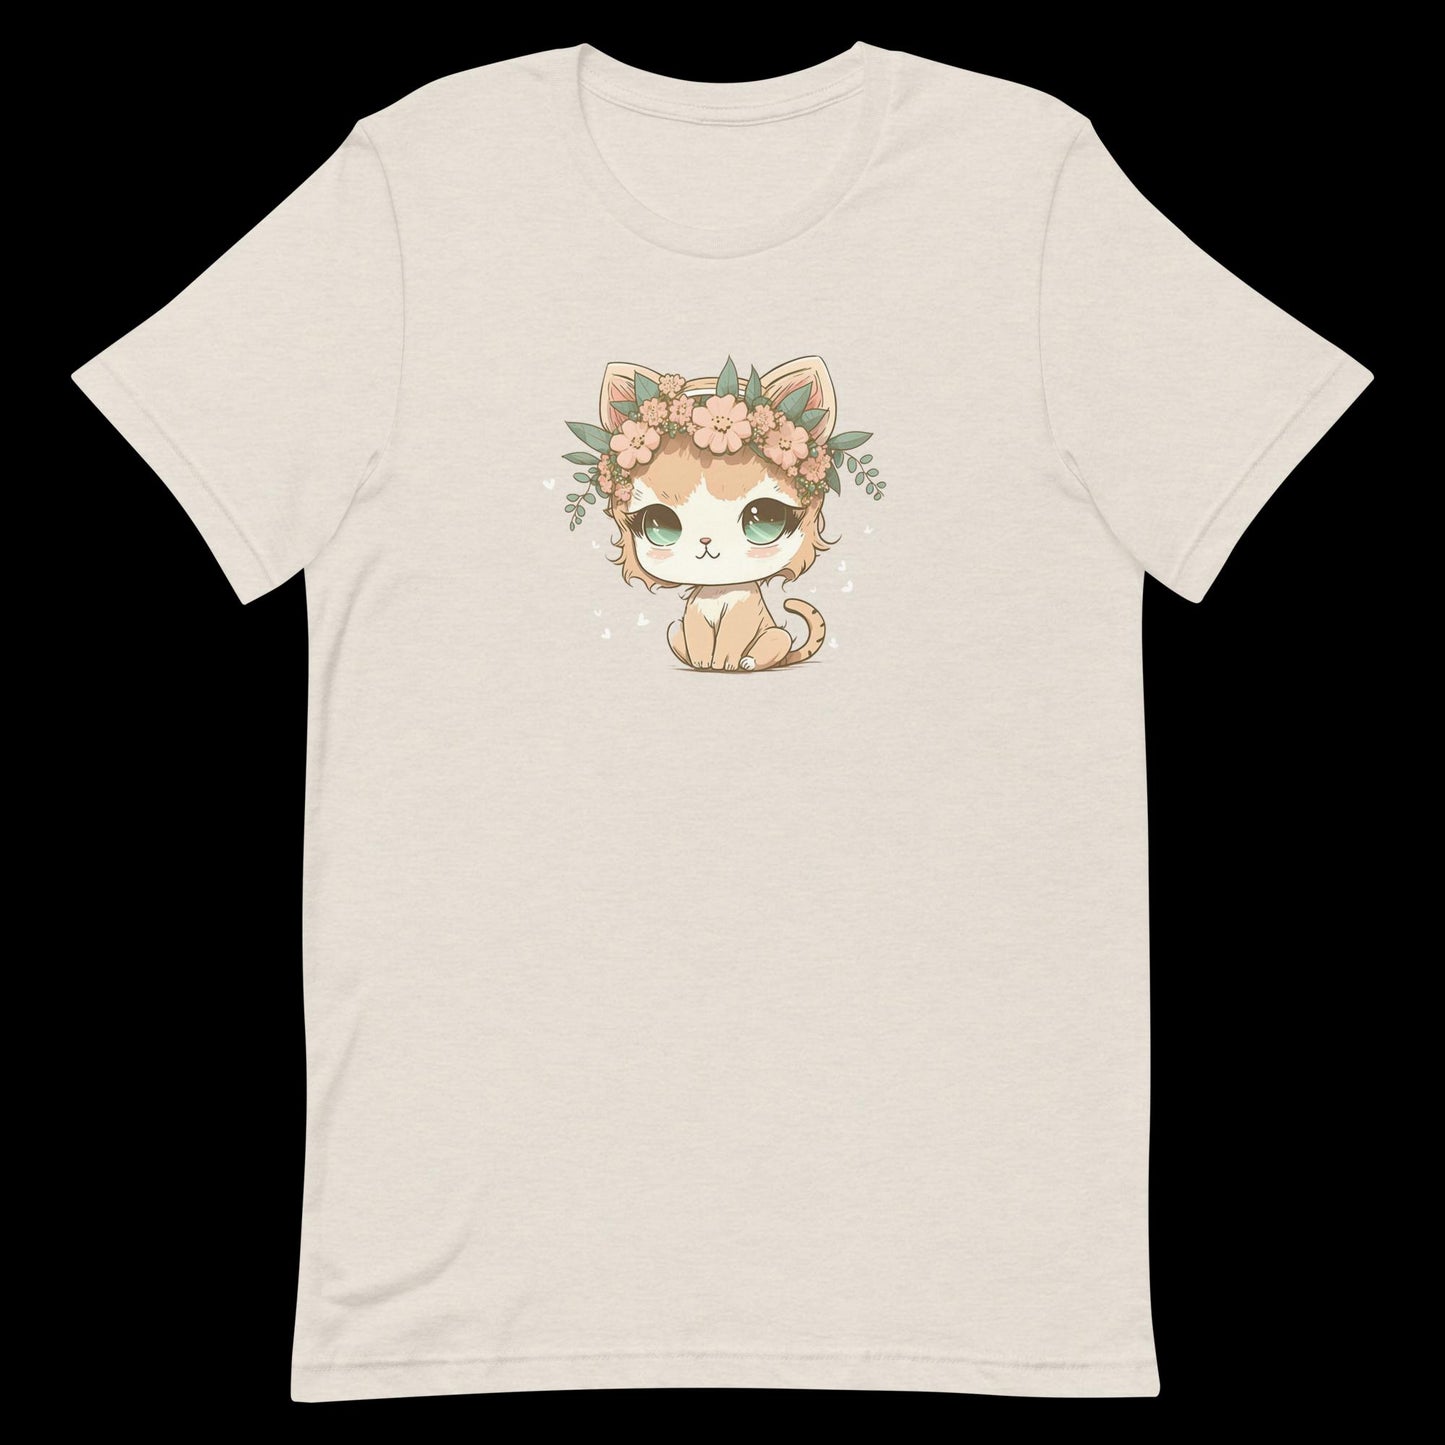 Chibi Kitten With Flower Crown #2 - Unisex T-Shirt